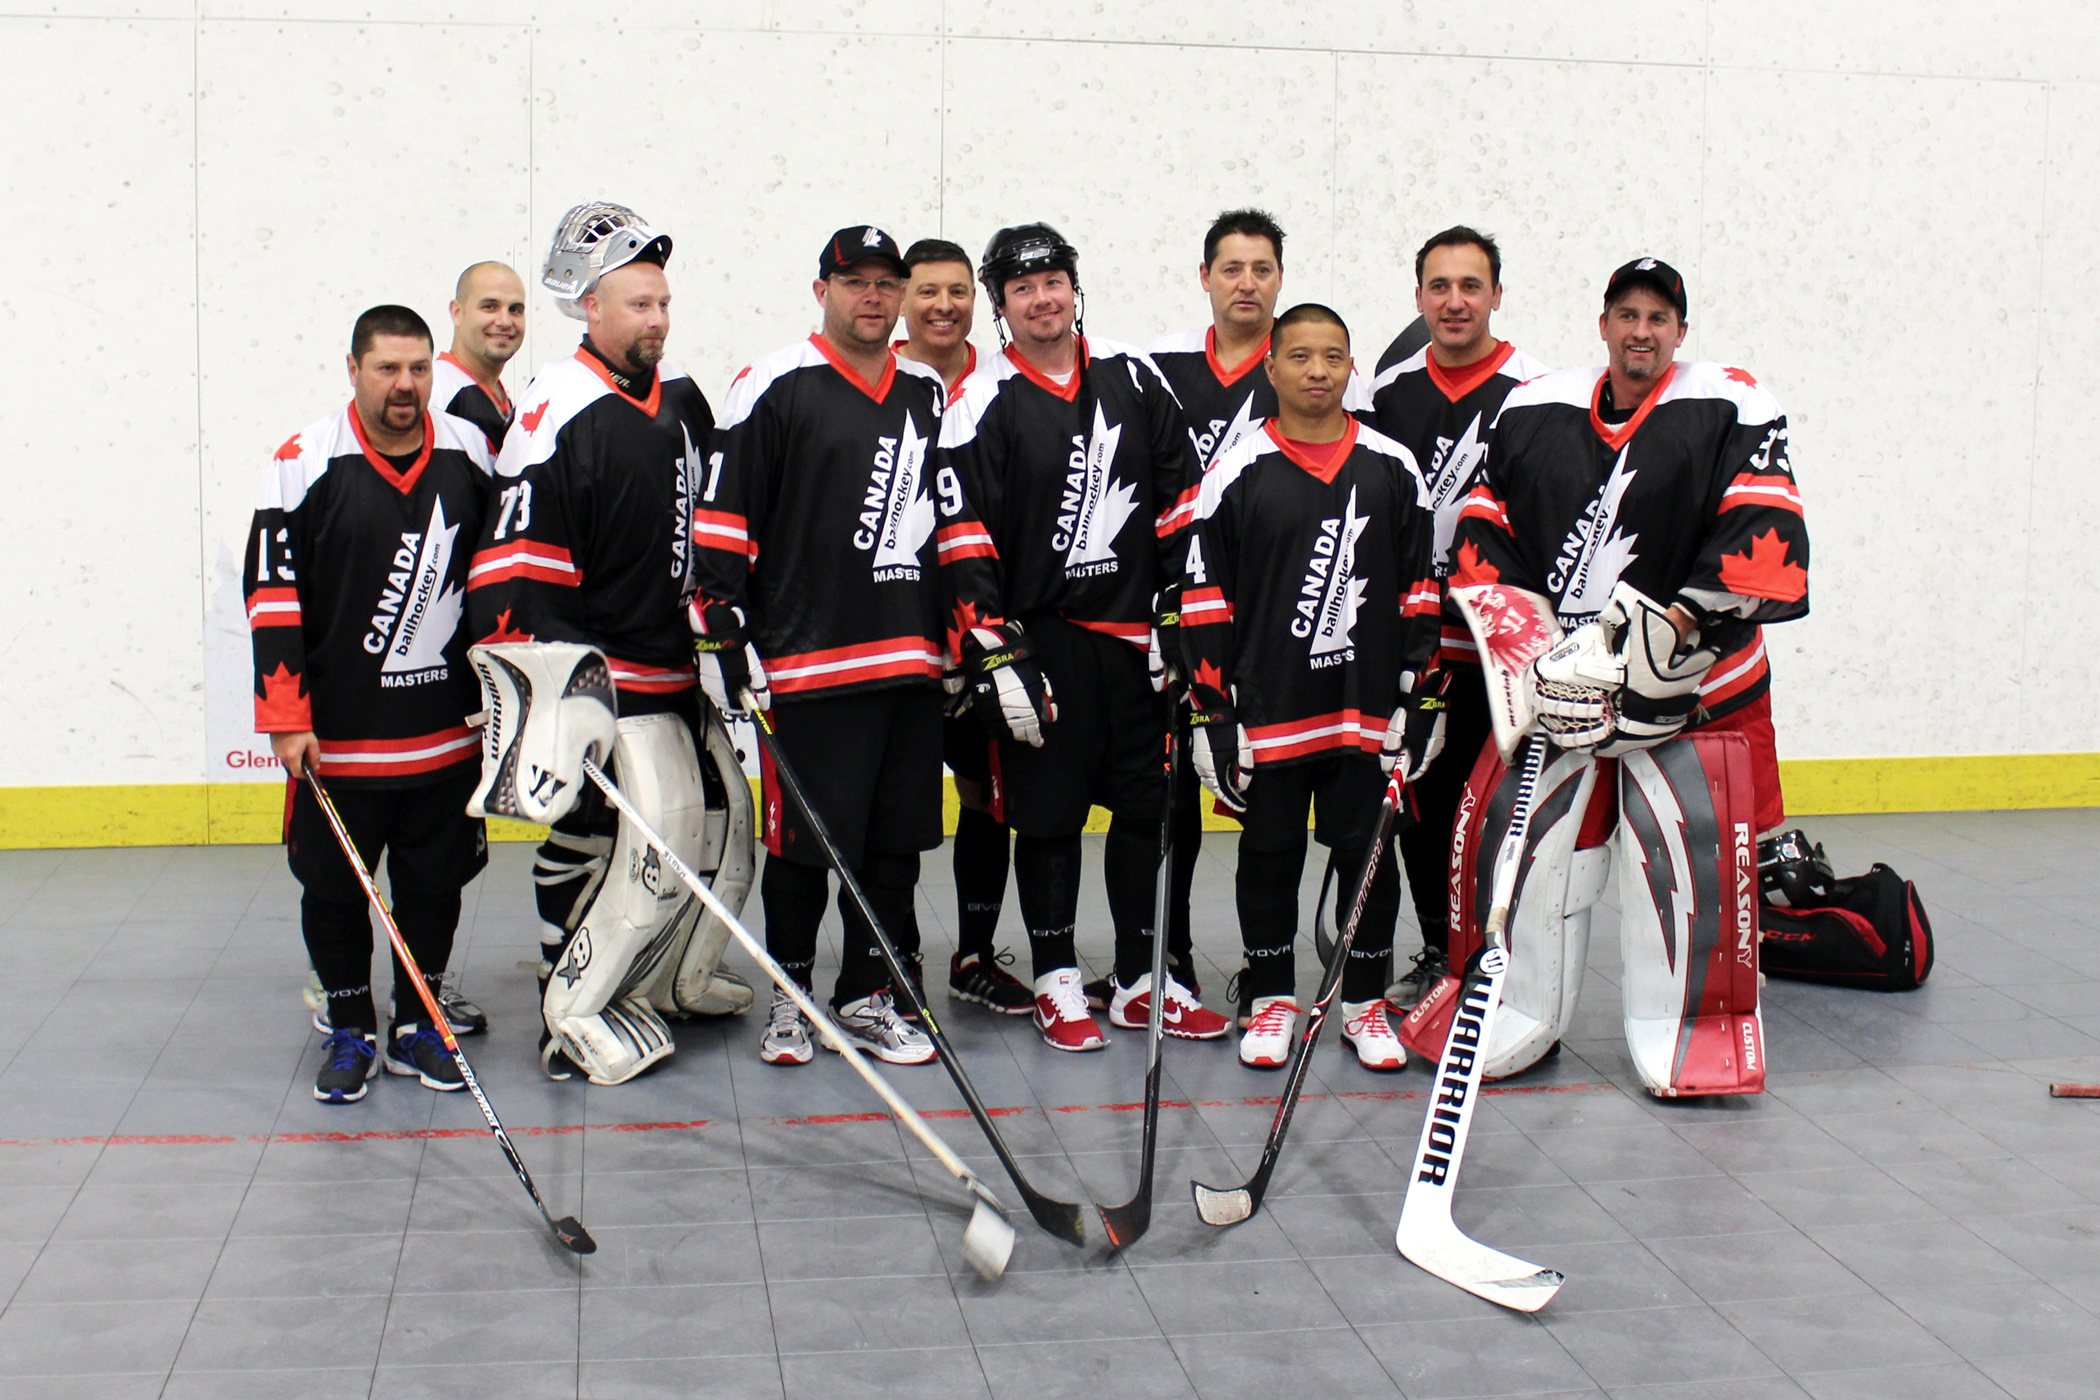 Ball Hockey: Equipment, Sticks, Team Sport, Canada Team, Ballhockey Masters, Warrior Sticks. 2100x1400 HD Wallpaper.